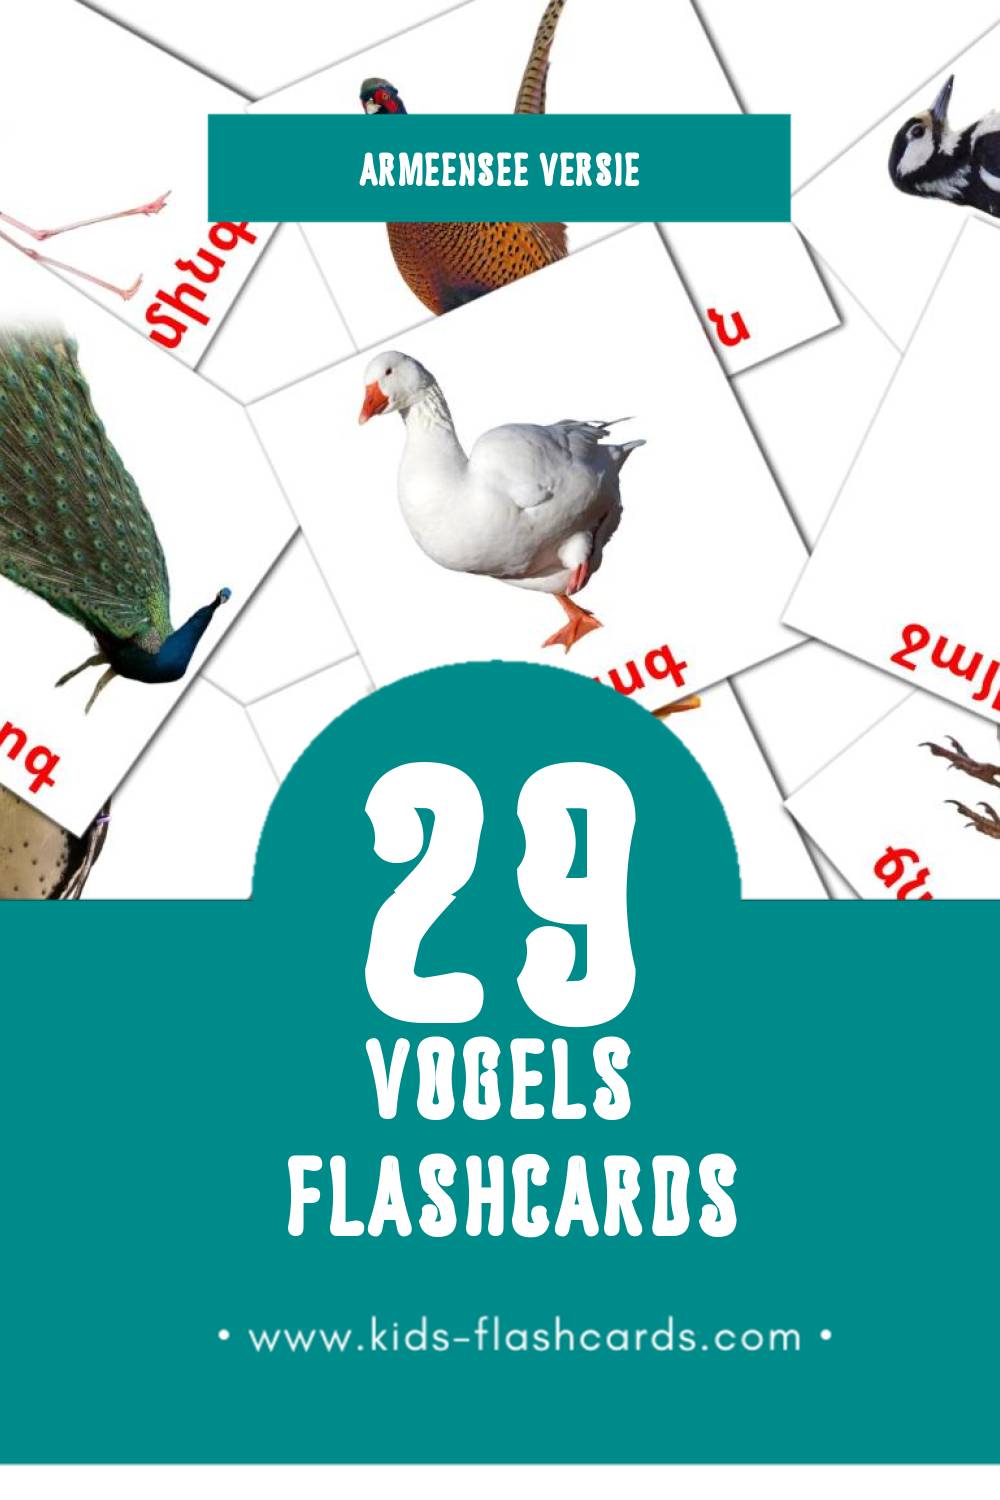 Visuele Թռչուններ Flashcards voor Kleuters (29 kaarten in het Armeense)